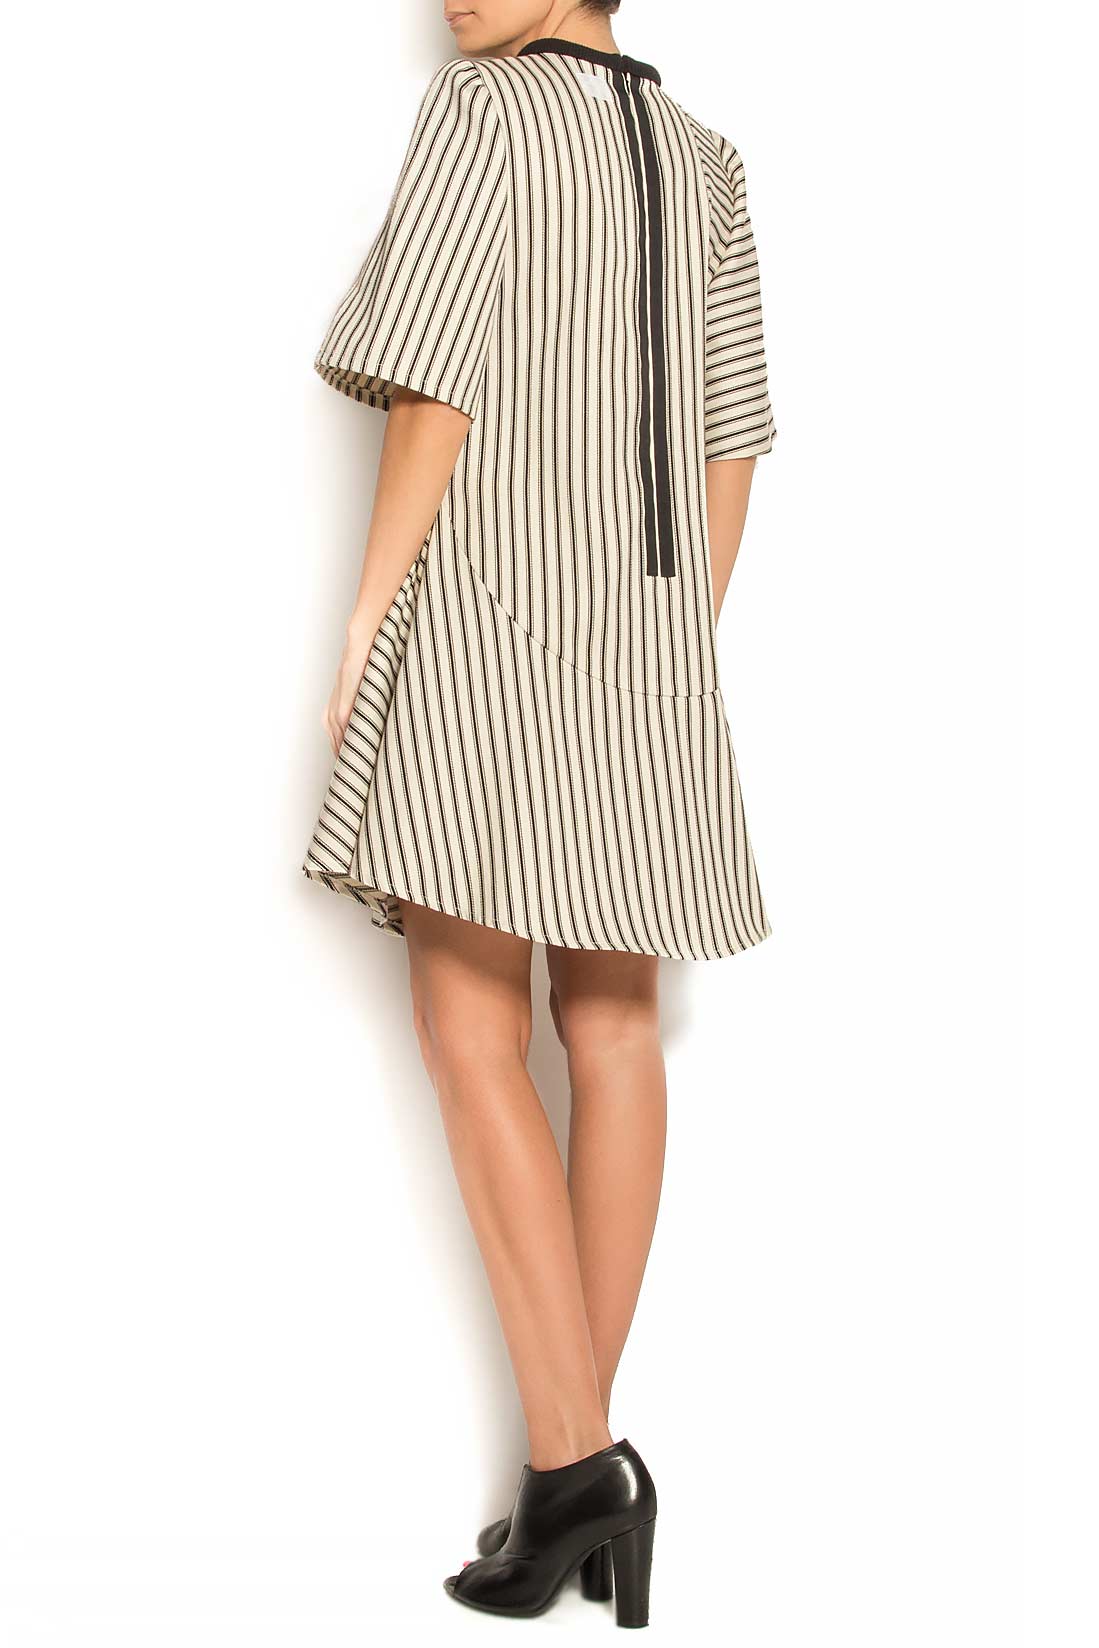 Striped cotton mini dress ATU Body Couture image 2